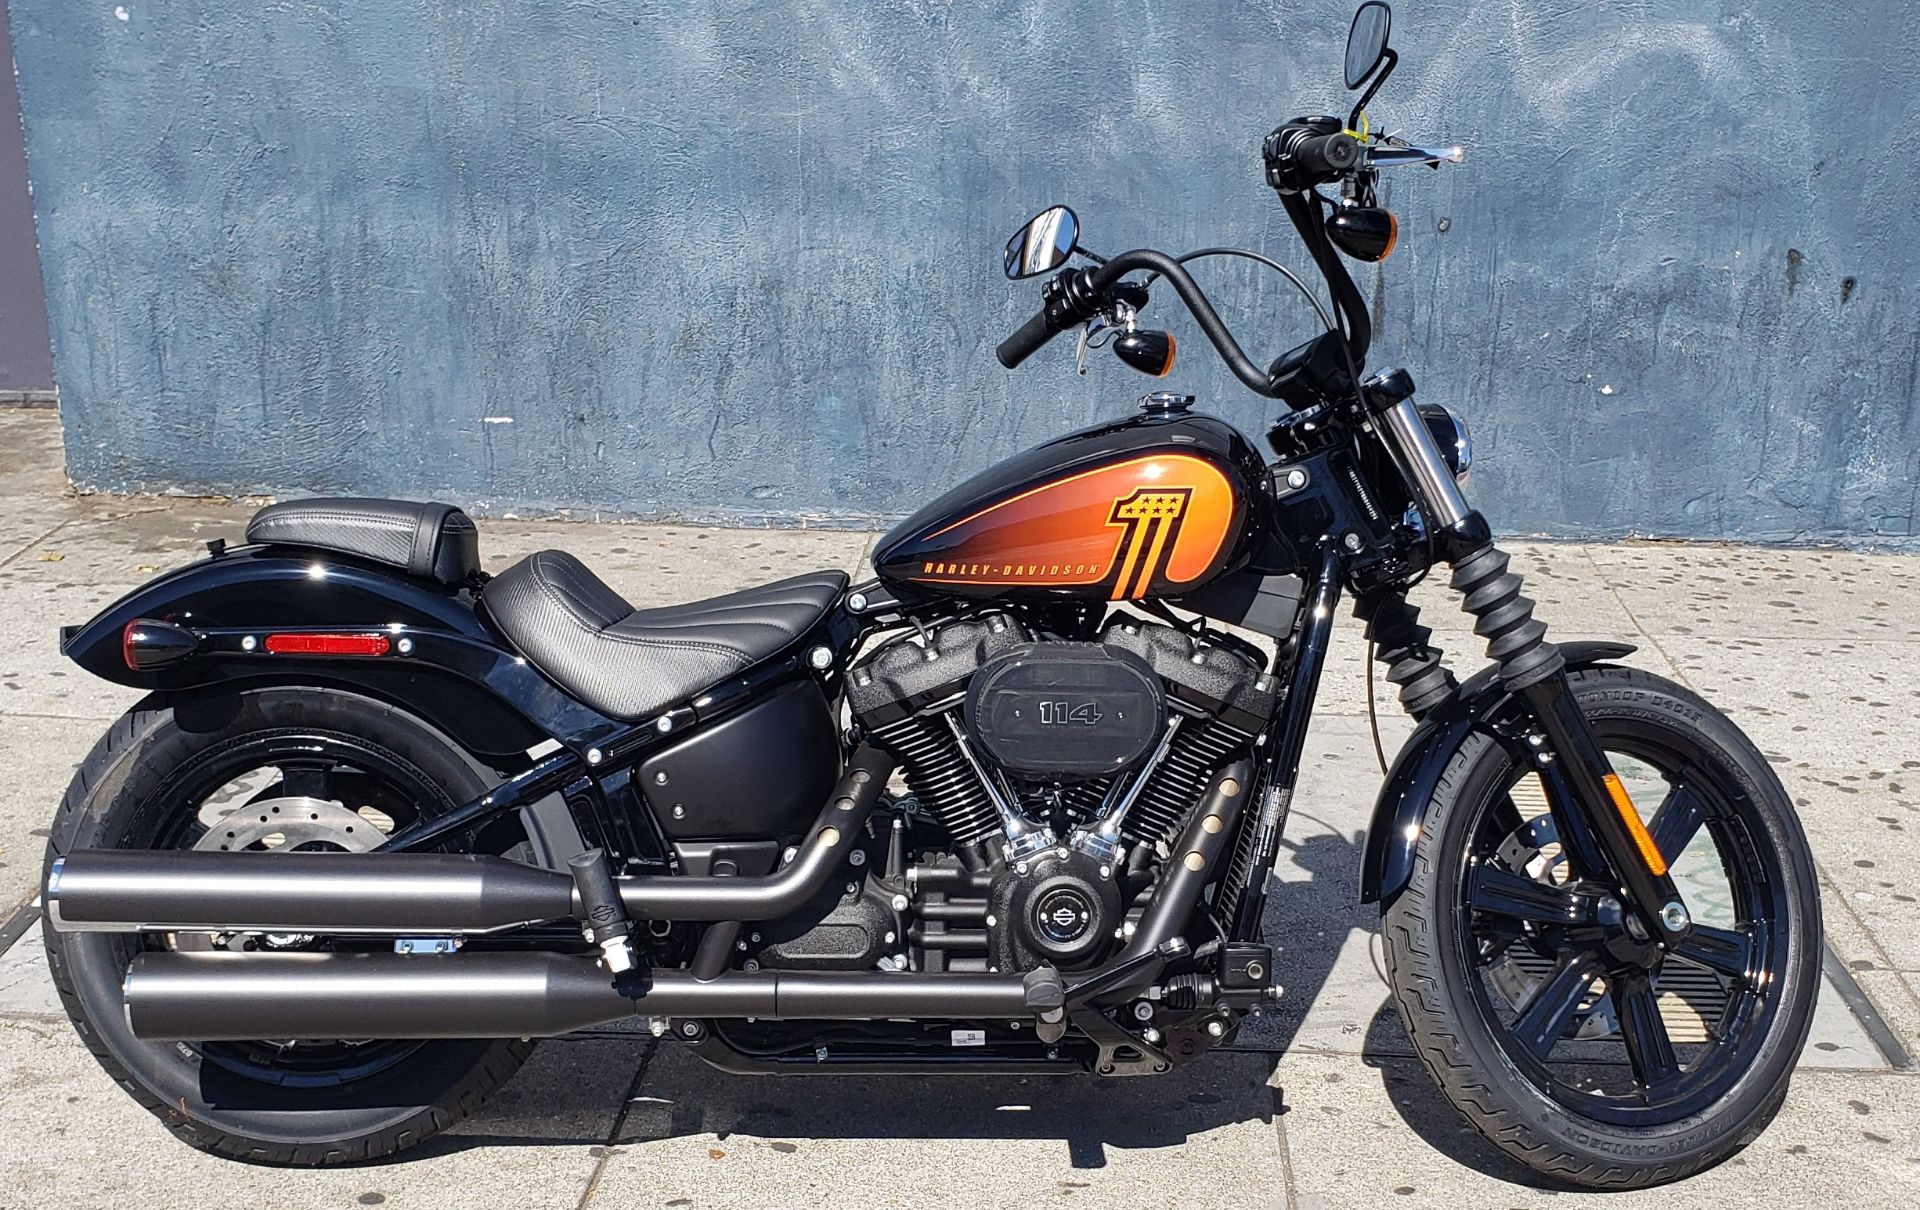 2022 Harley-Davidson Street Bob® 114 in San Francisco, California - Photo 1